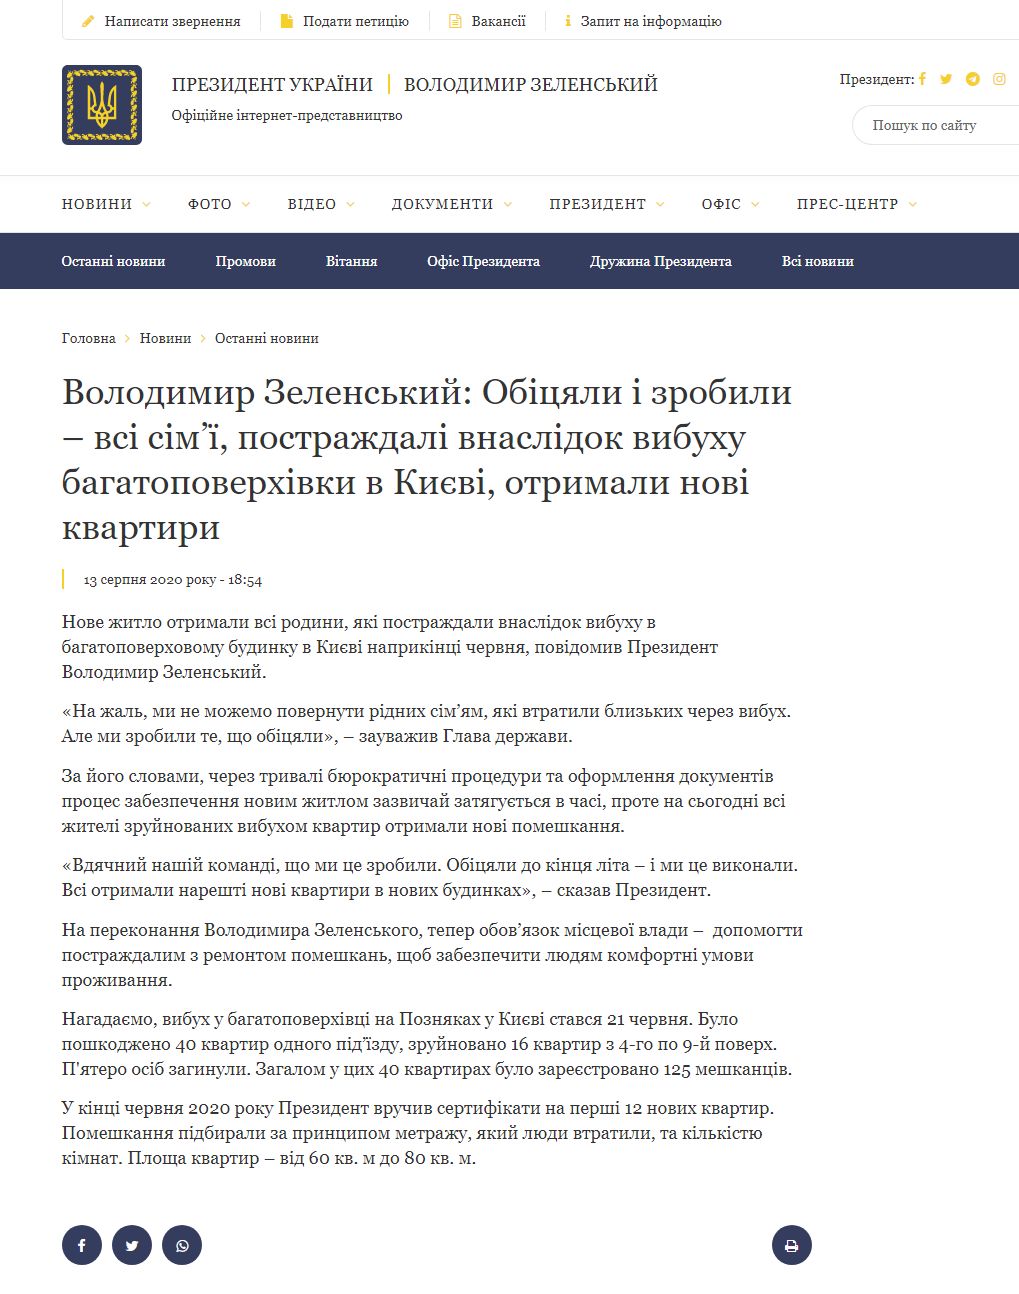 https://www.president.gov.ua/news/volodimir-zelenskij-obicyali-i-zrobili-vsi-simyi-postrazhdal-62717